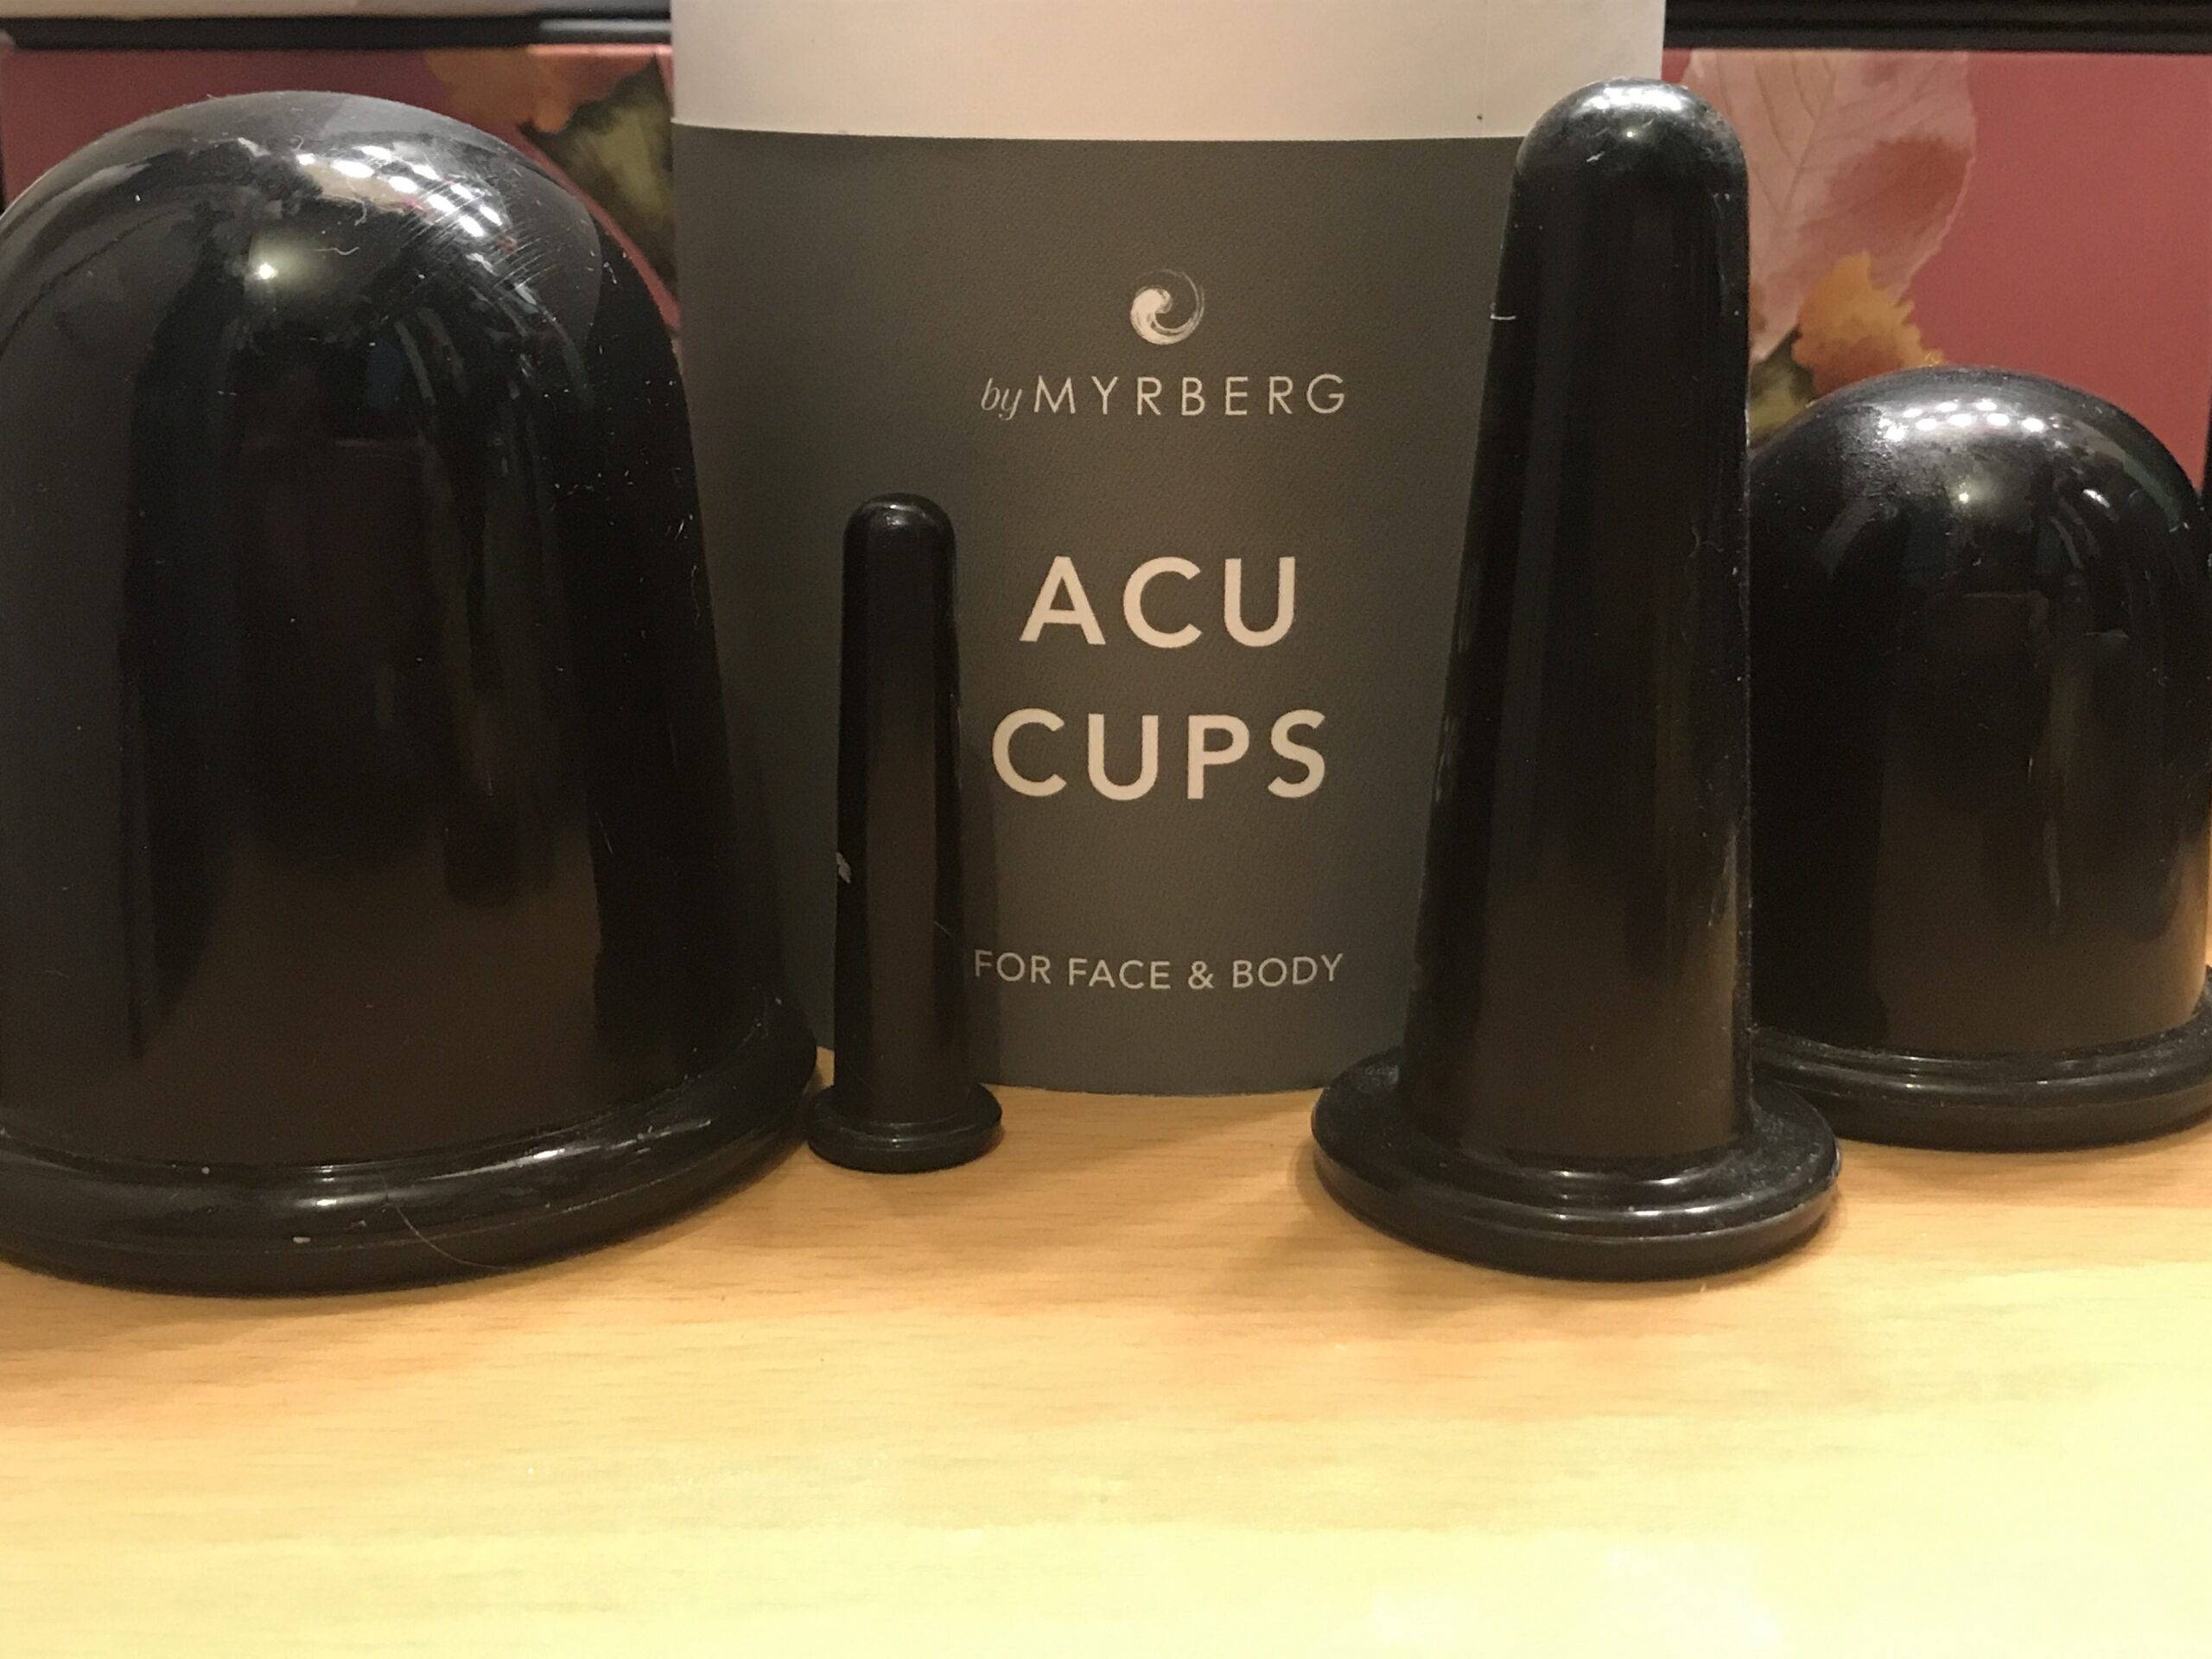 by Myrberg Acu cups